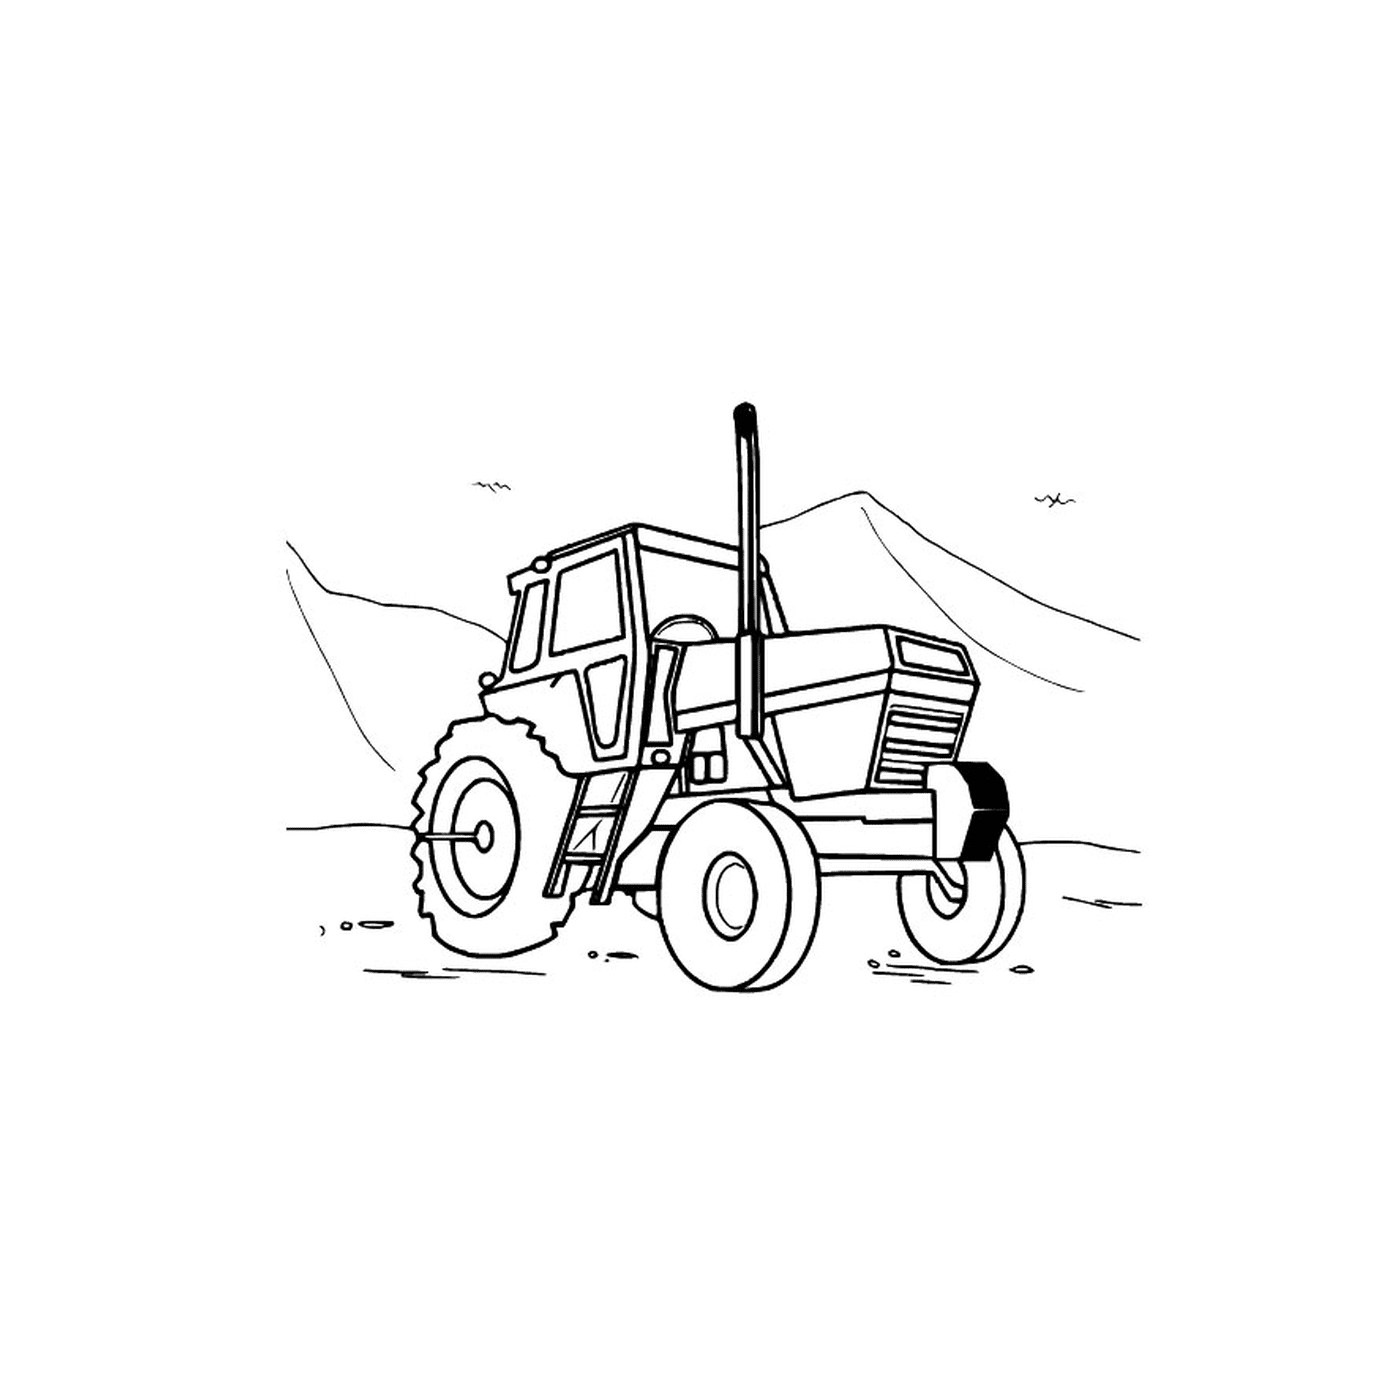  А трактор 